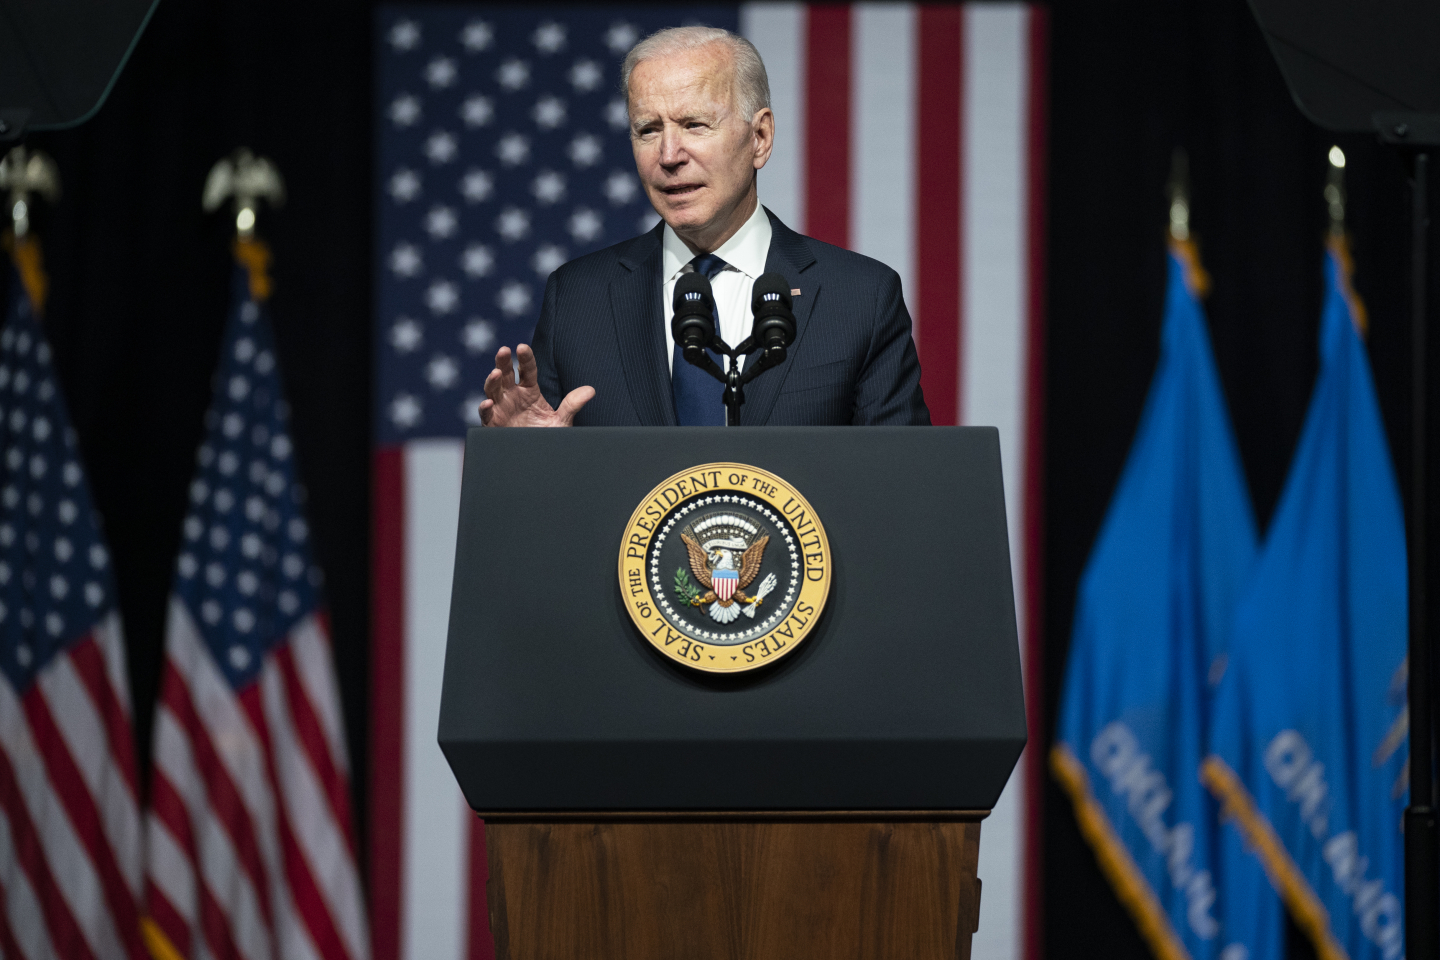 Biden speaks at Presidential Podium